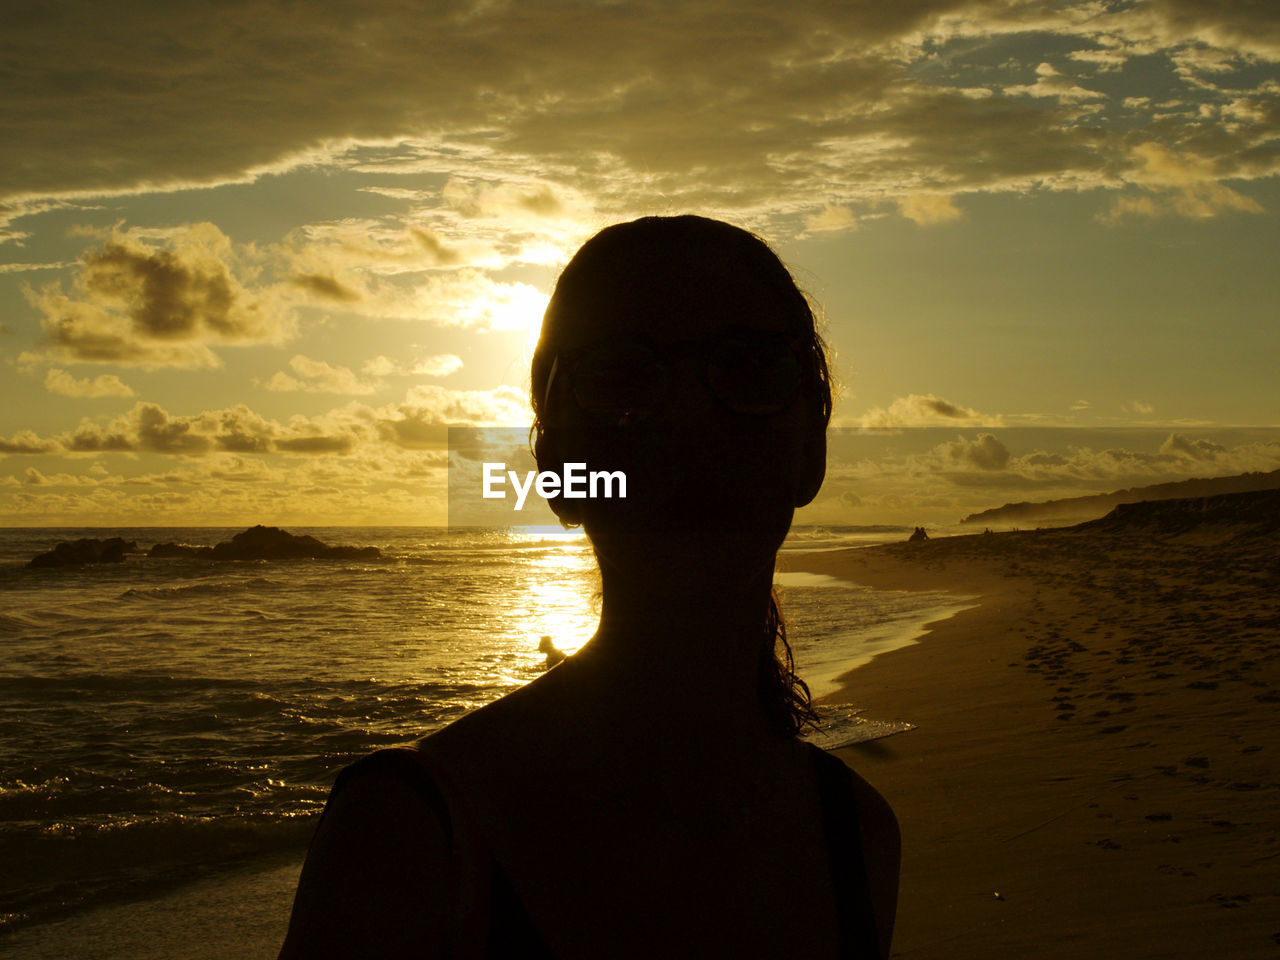 PORTRAIT OF WOMAN ON BEACH AGAINST SUNSET SKY